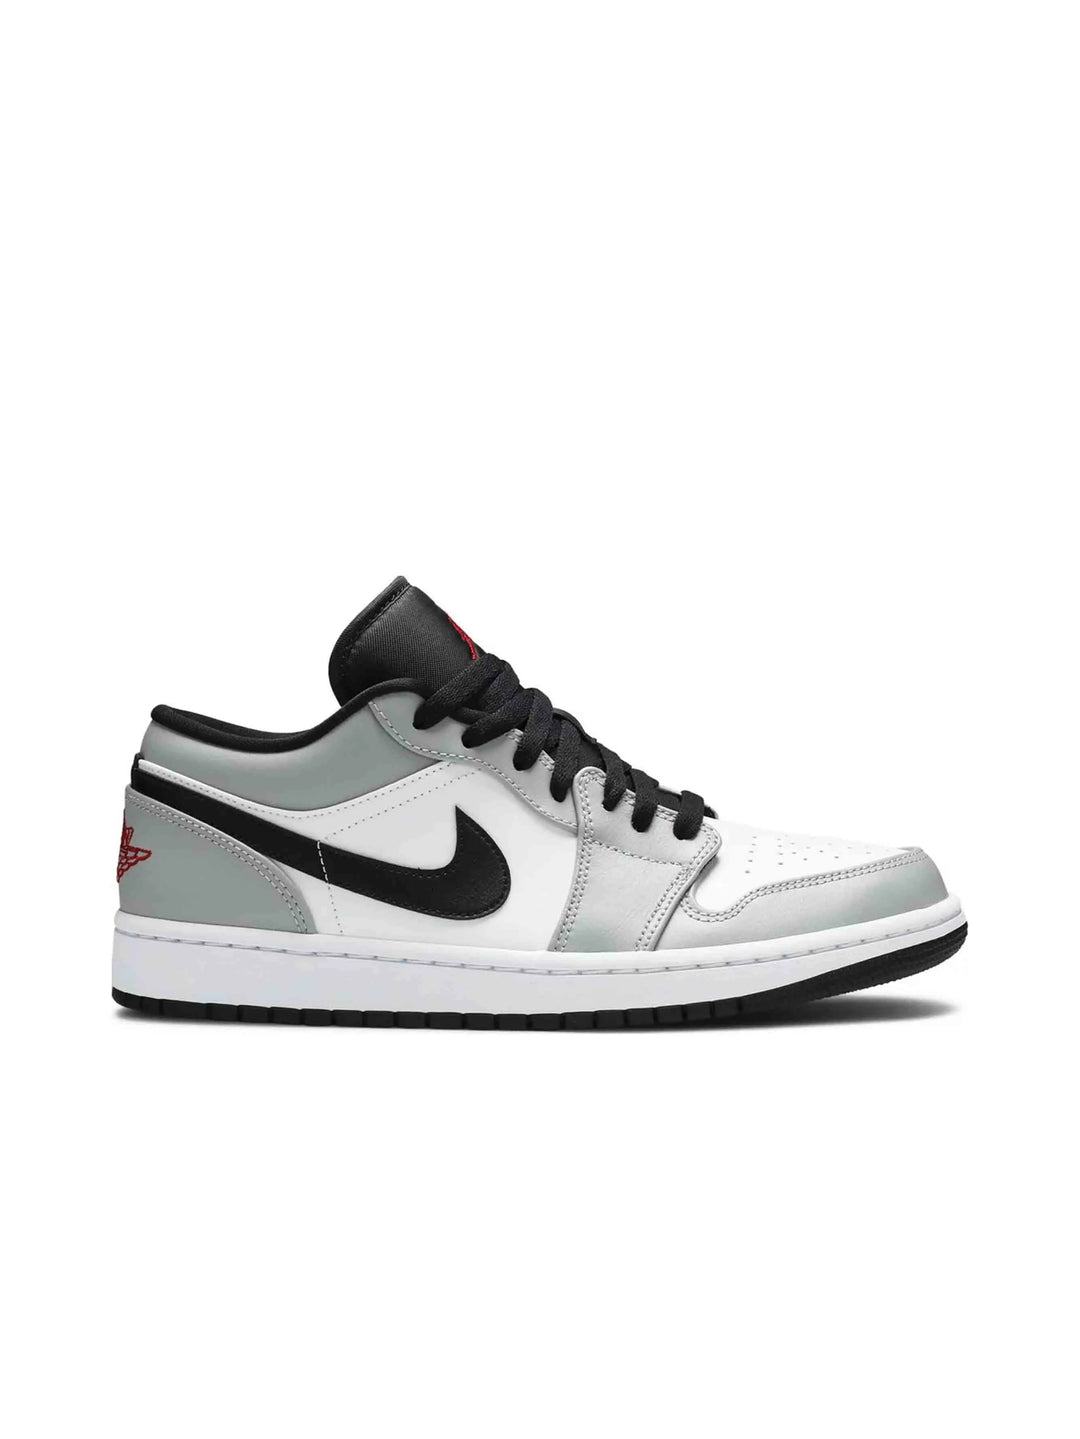 Nike Air Jordan 1 Low Light Smoke Grey - Prior